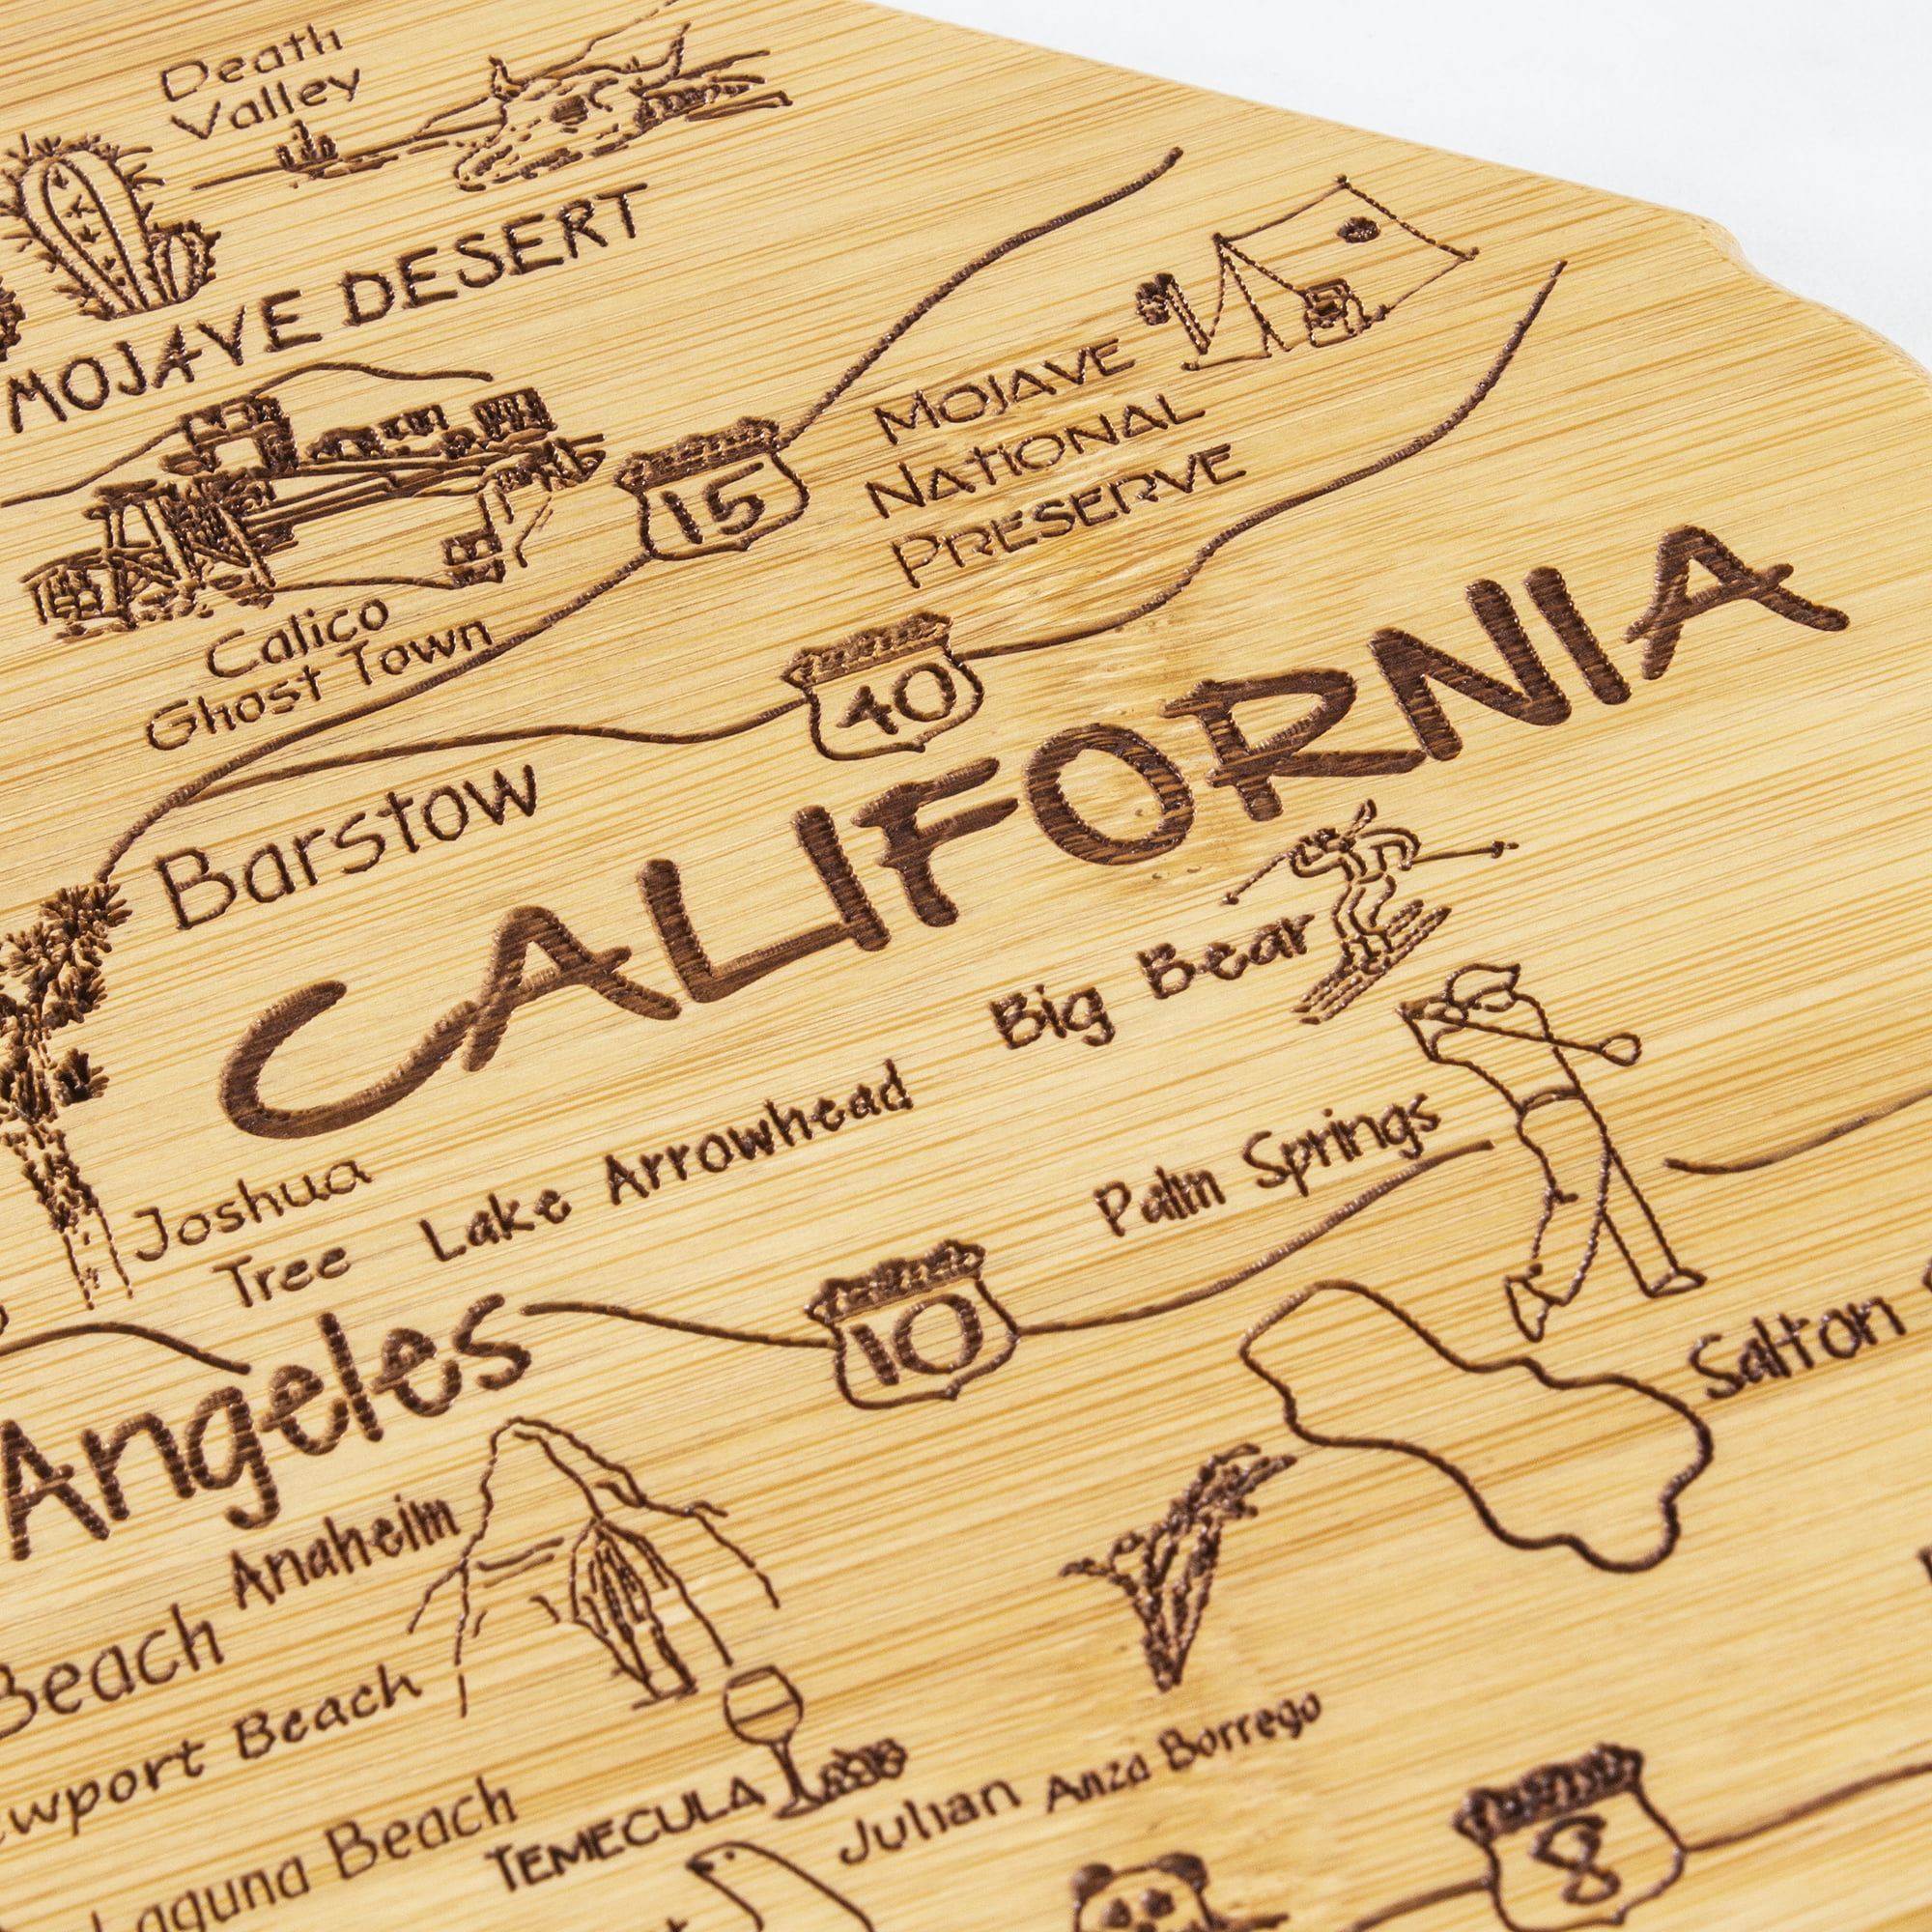 California Large Bamboo Cutting Board — San José Made